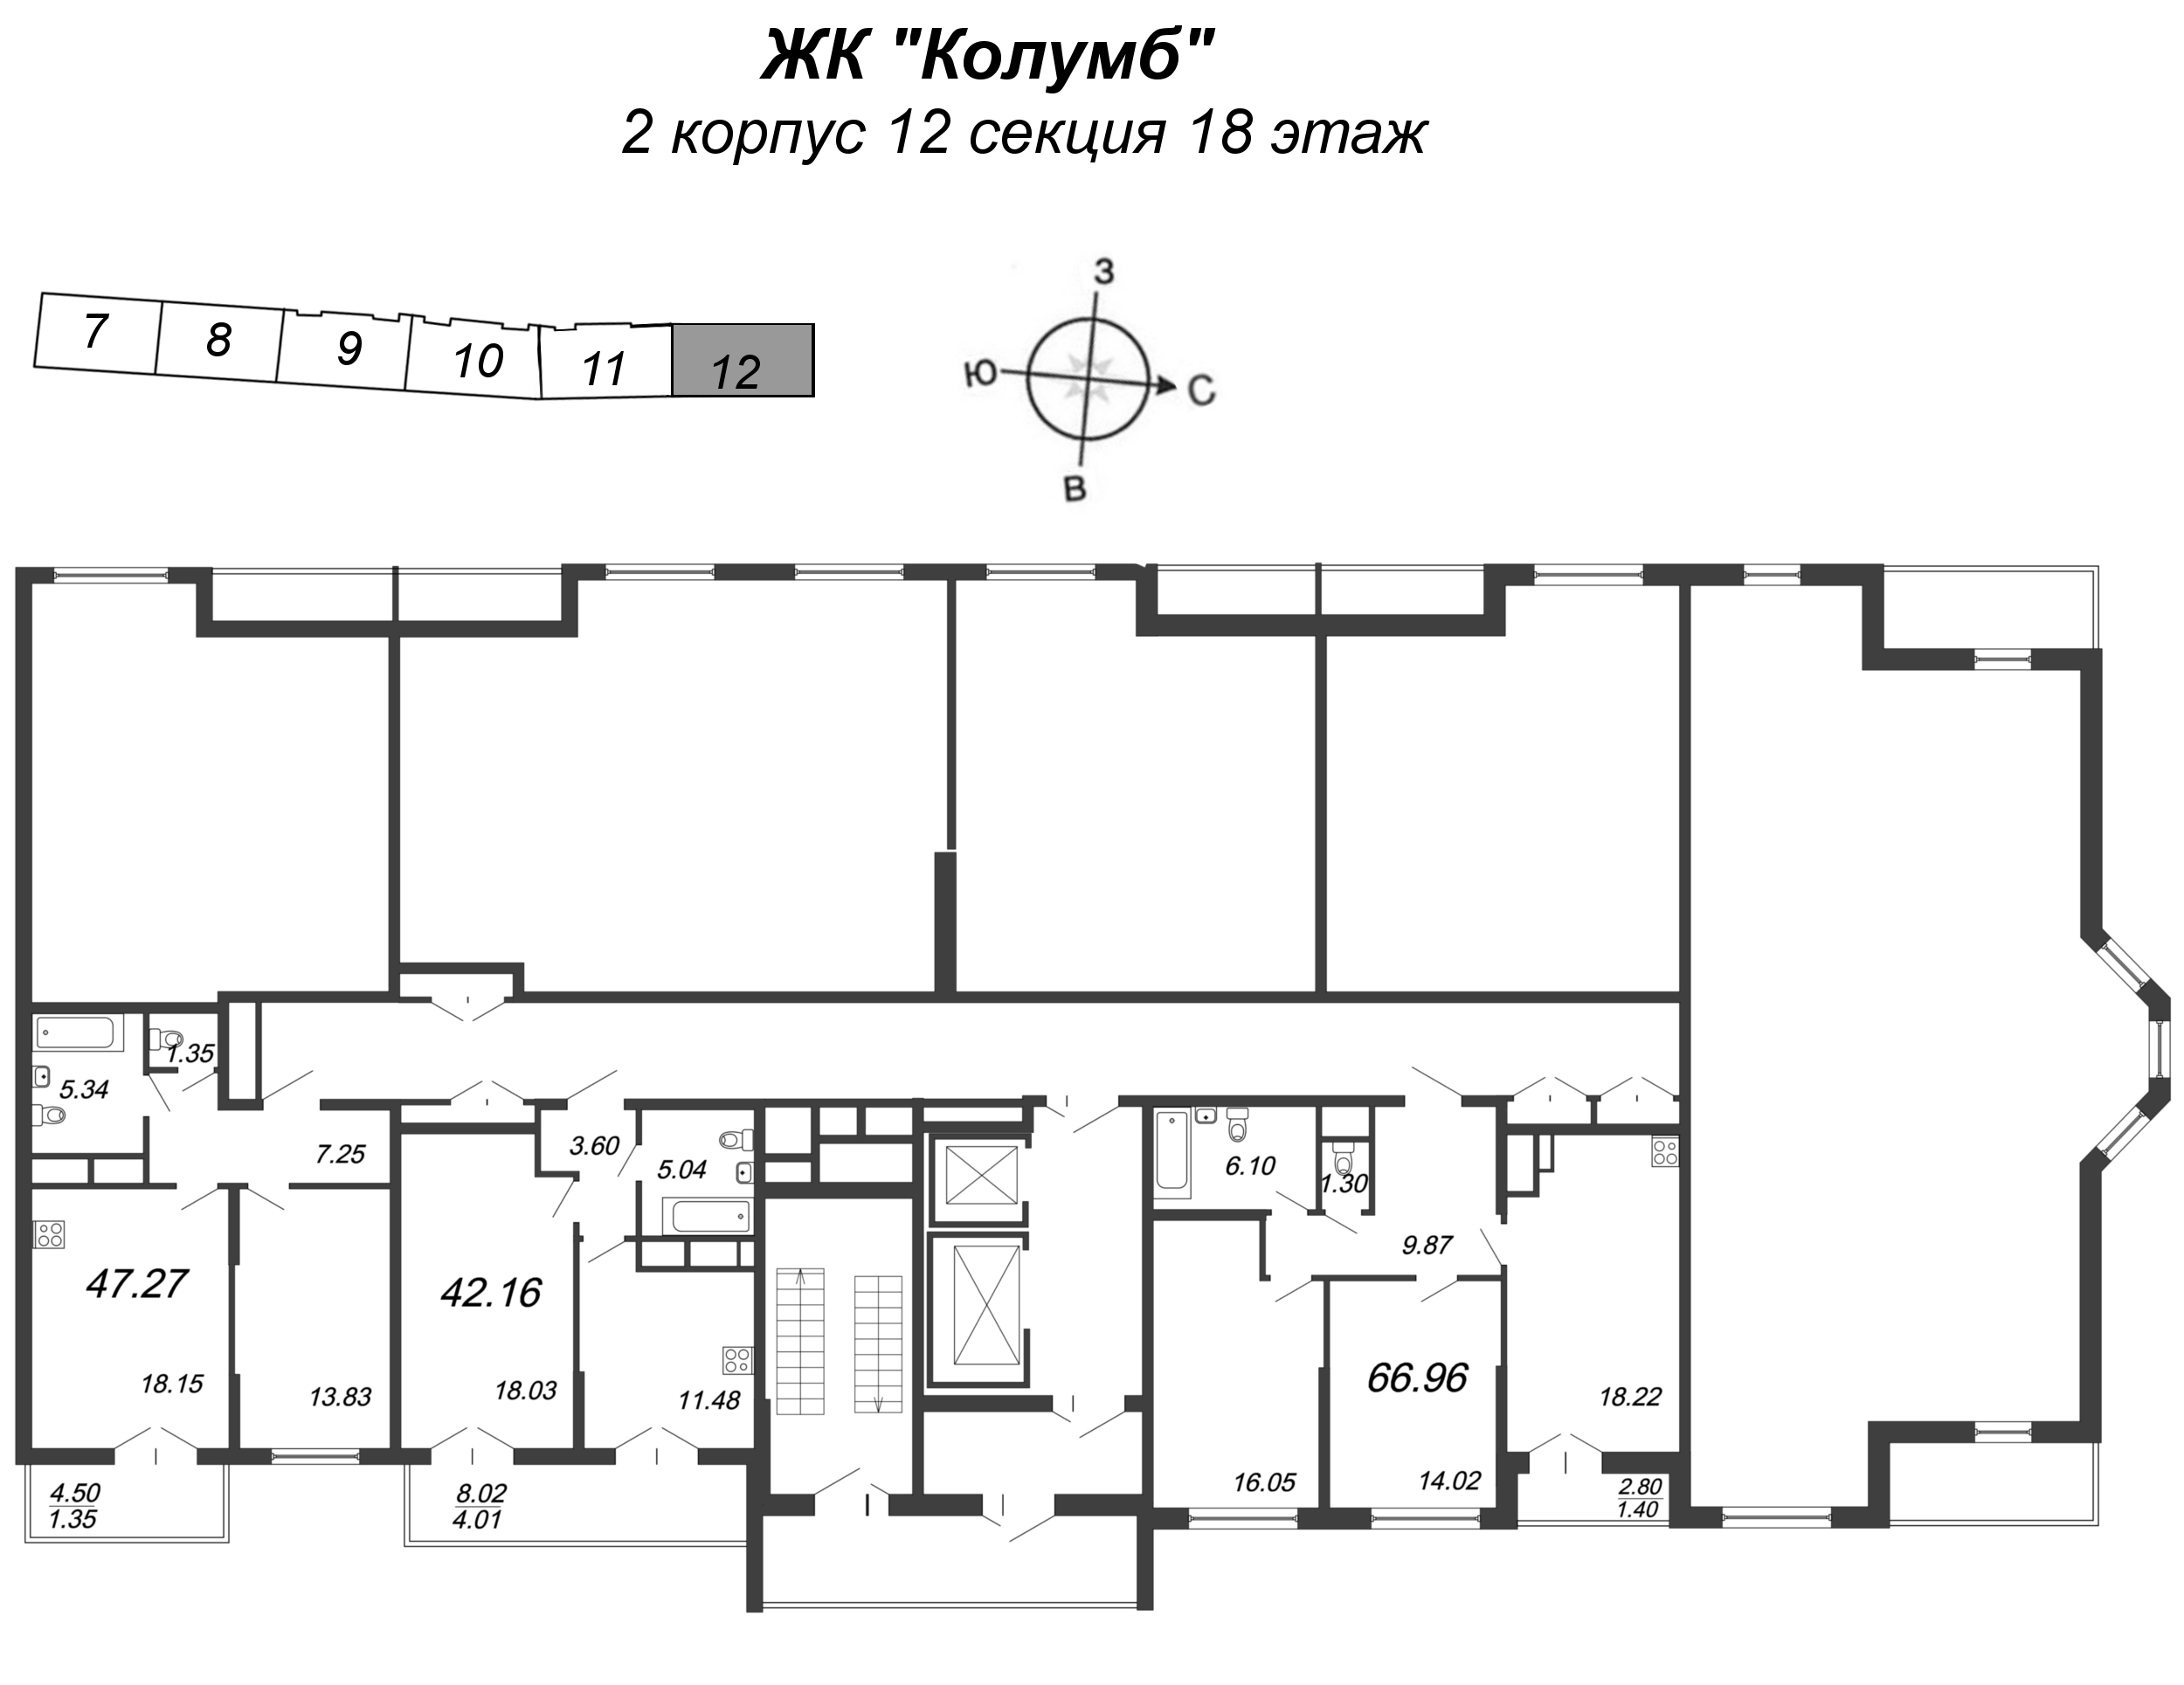 3-комнатная (Евро) квартира, 66.96 м² - планировка этажа